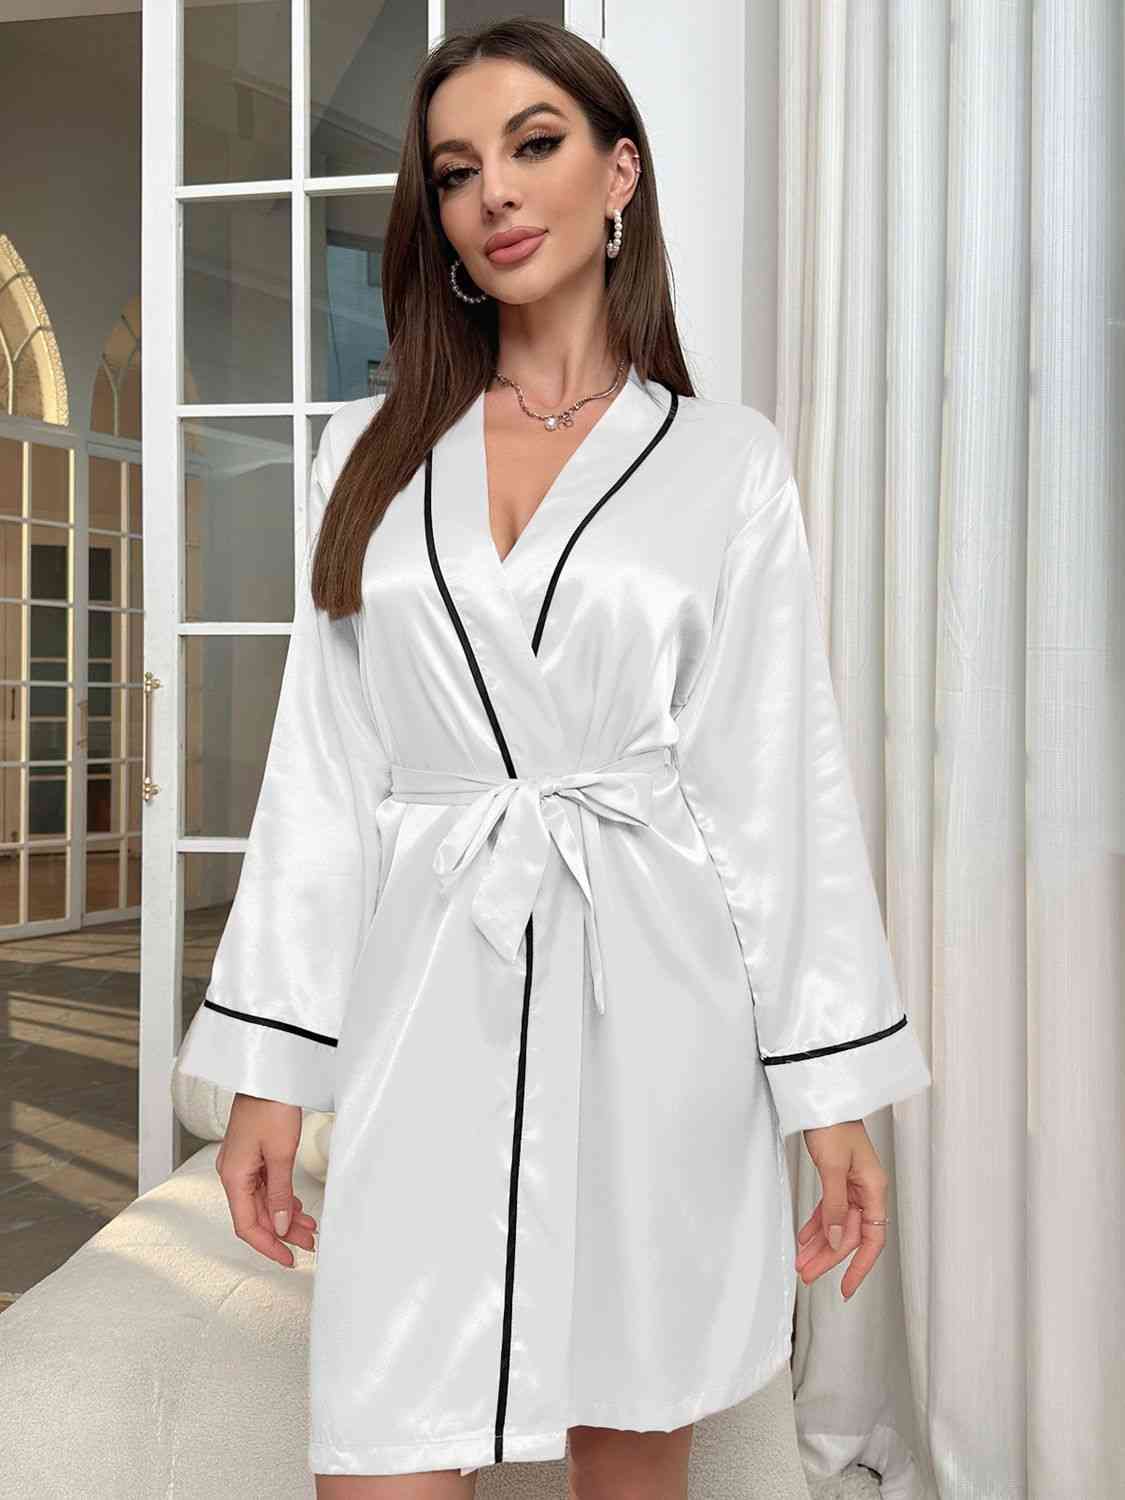 TEEK - Tie Waist Womens Robe ROBE TEEK Trend White S 